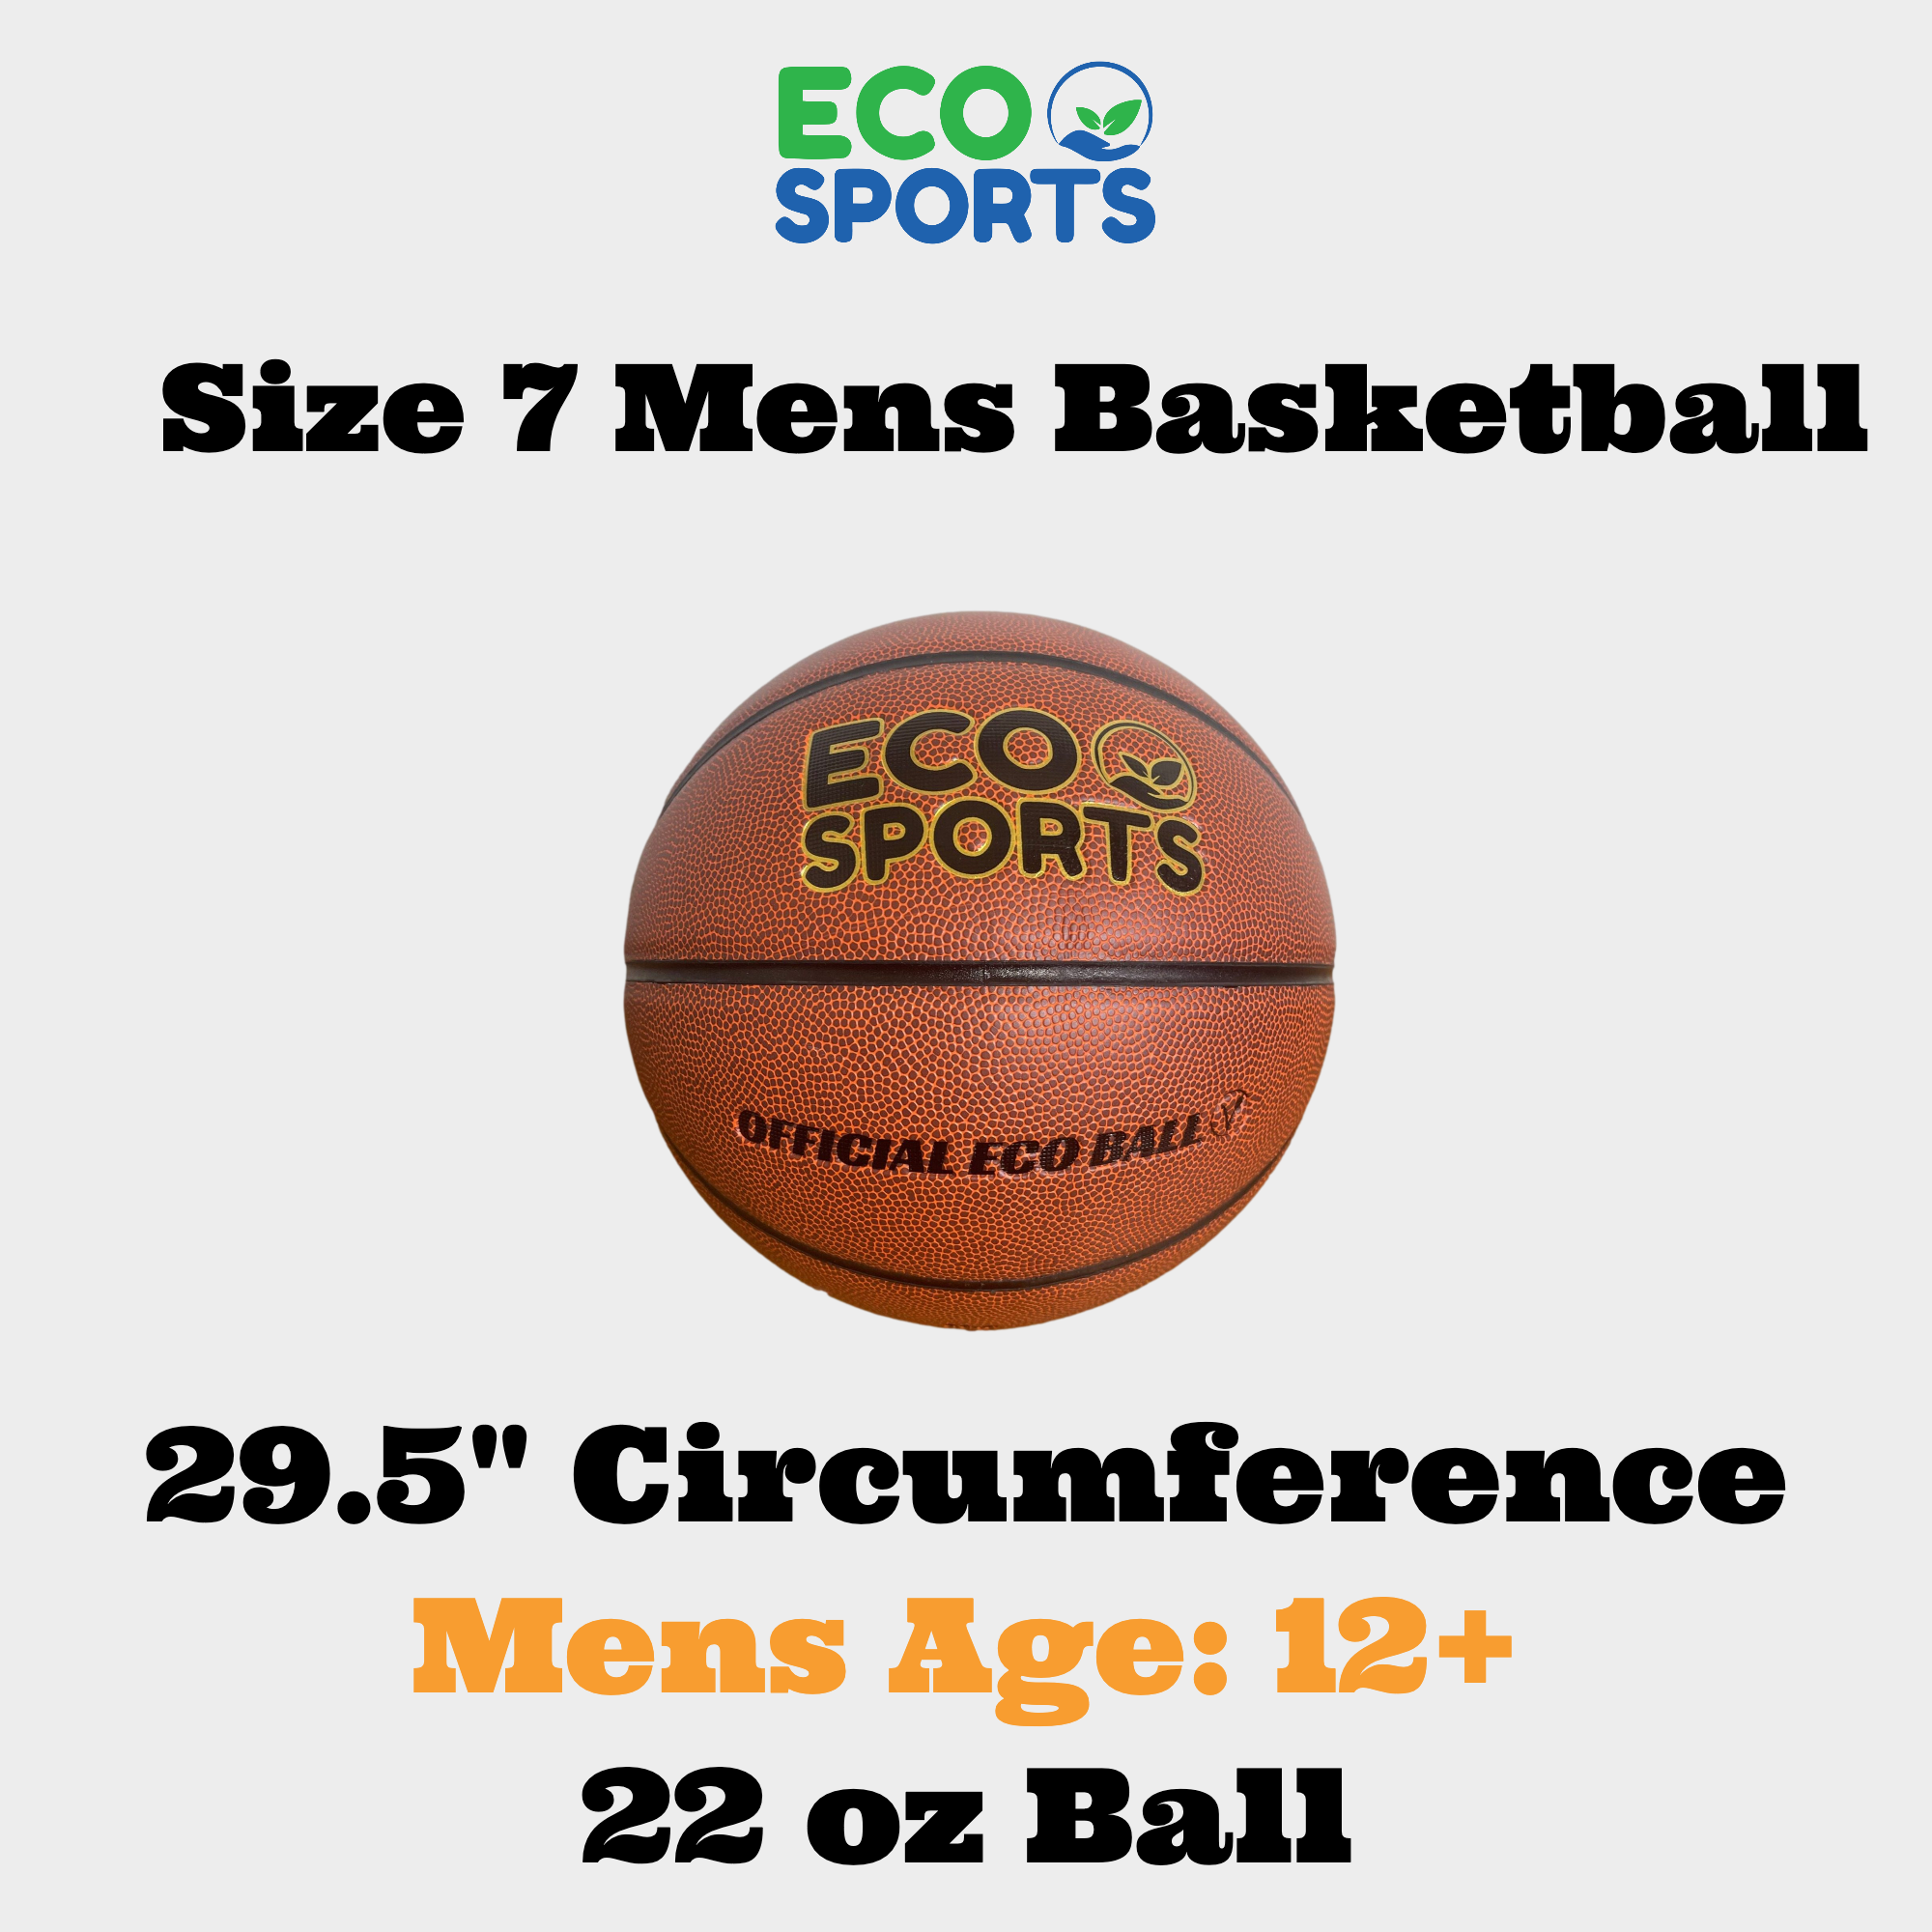 Men's Basketball 29.5" - Size 7 Basketballs